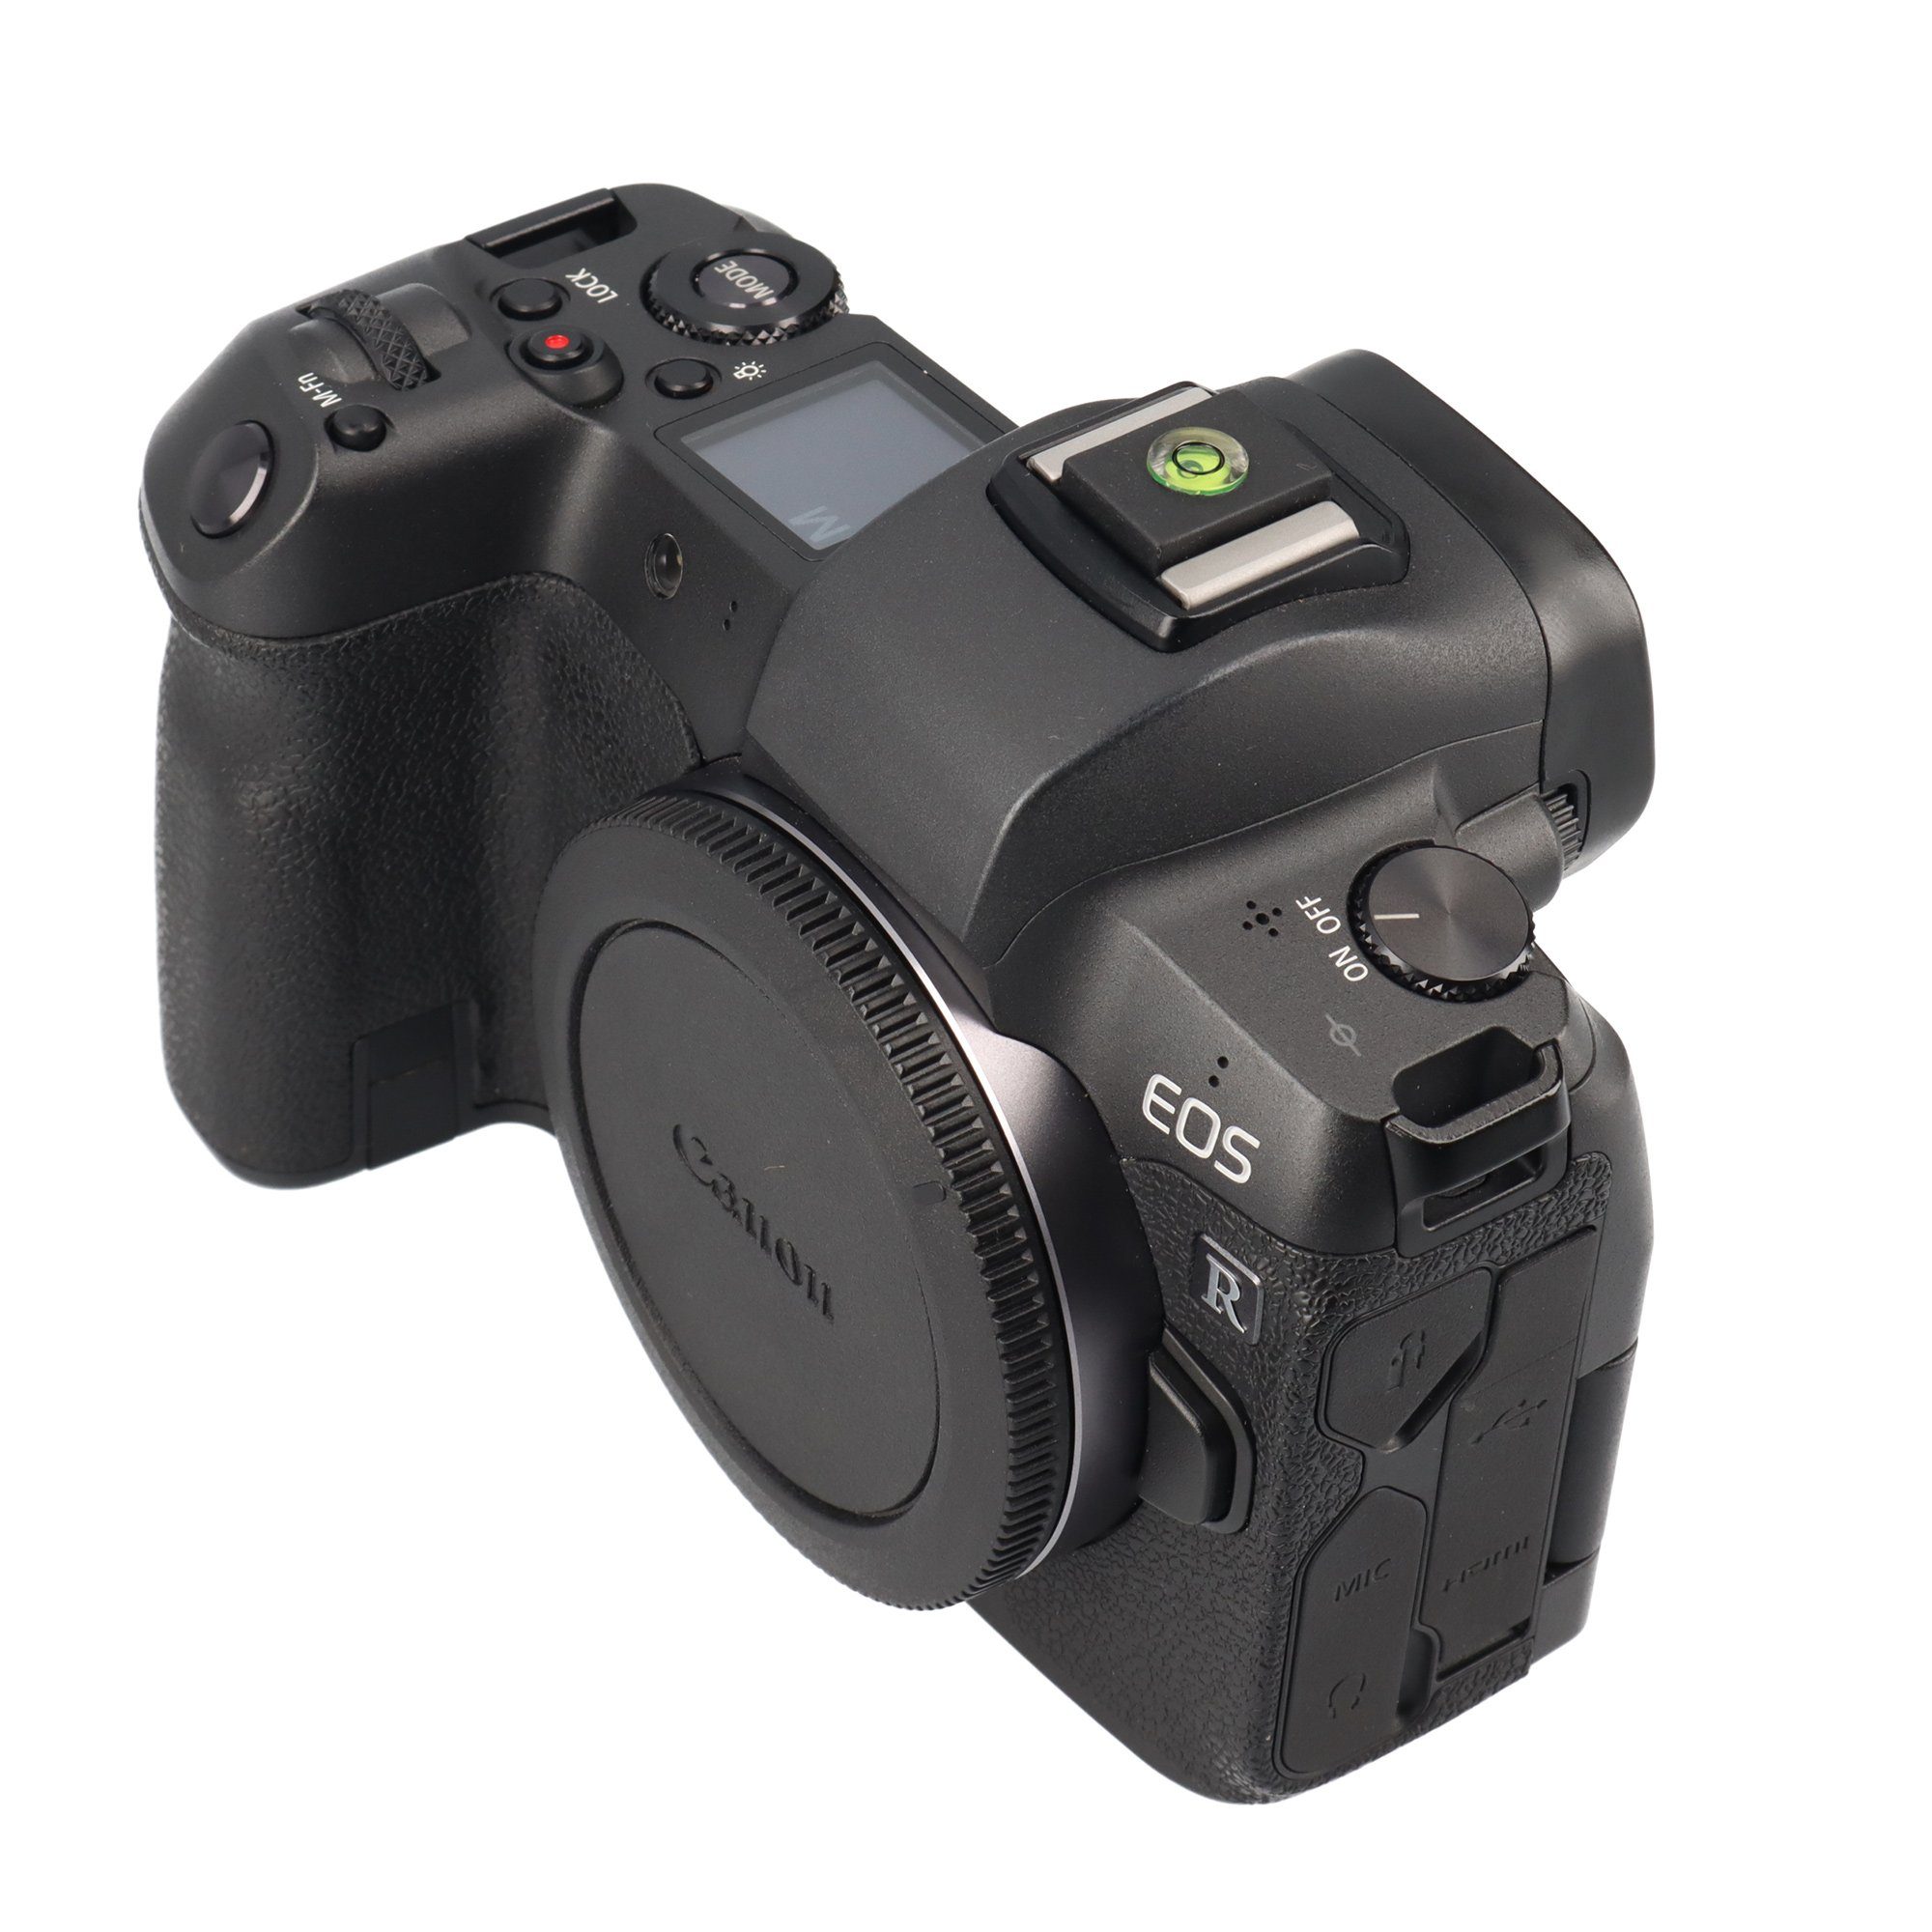 Standard-Blitzschuh Wasserwaage S5 ayex Dosenlibelle Systemkamera + Blitzschuhabdeckung